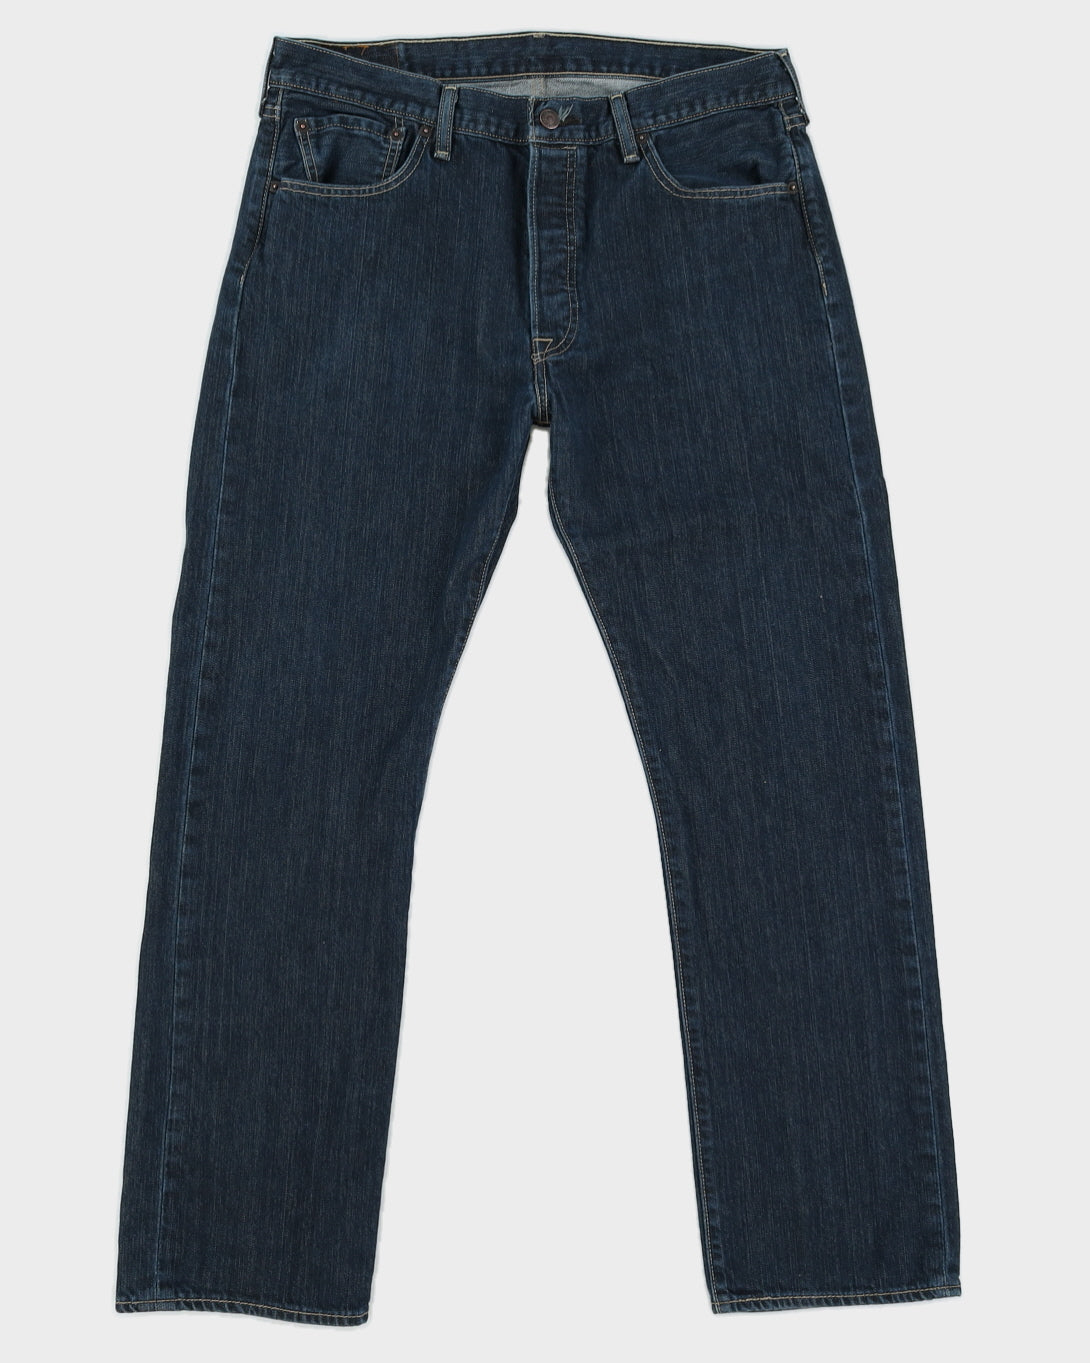 Levi's 501 Blue Dark Washed Jeans - W35 L30